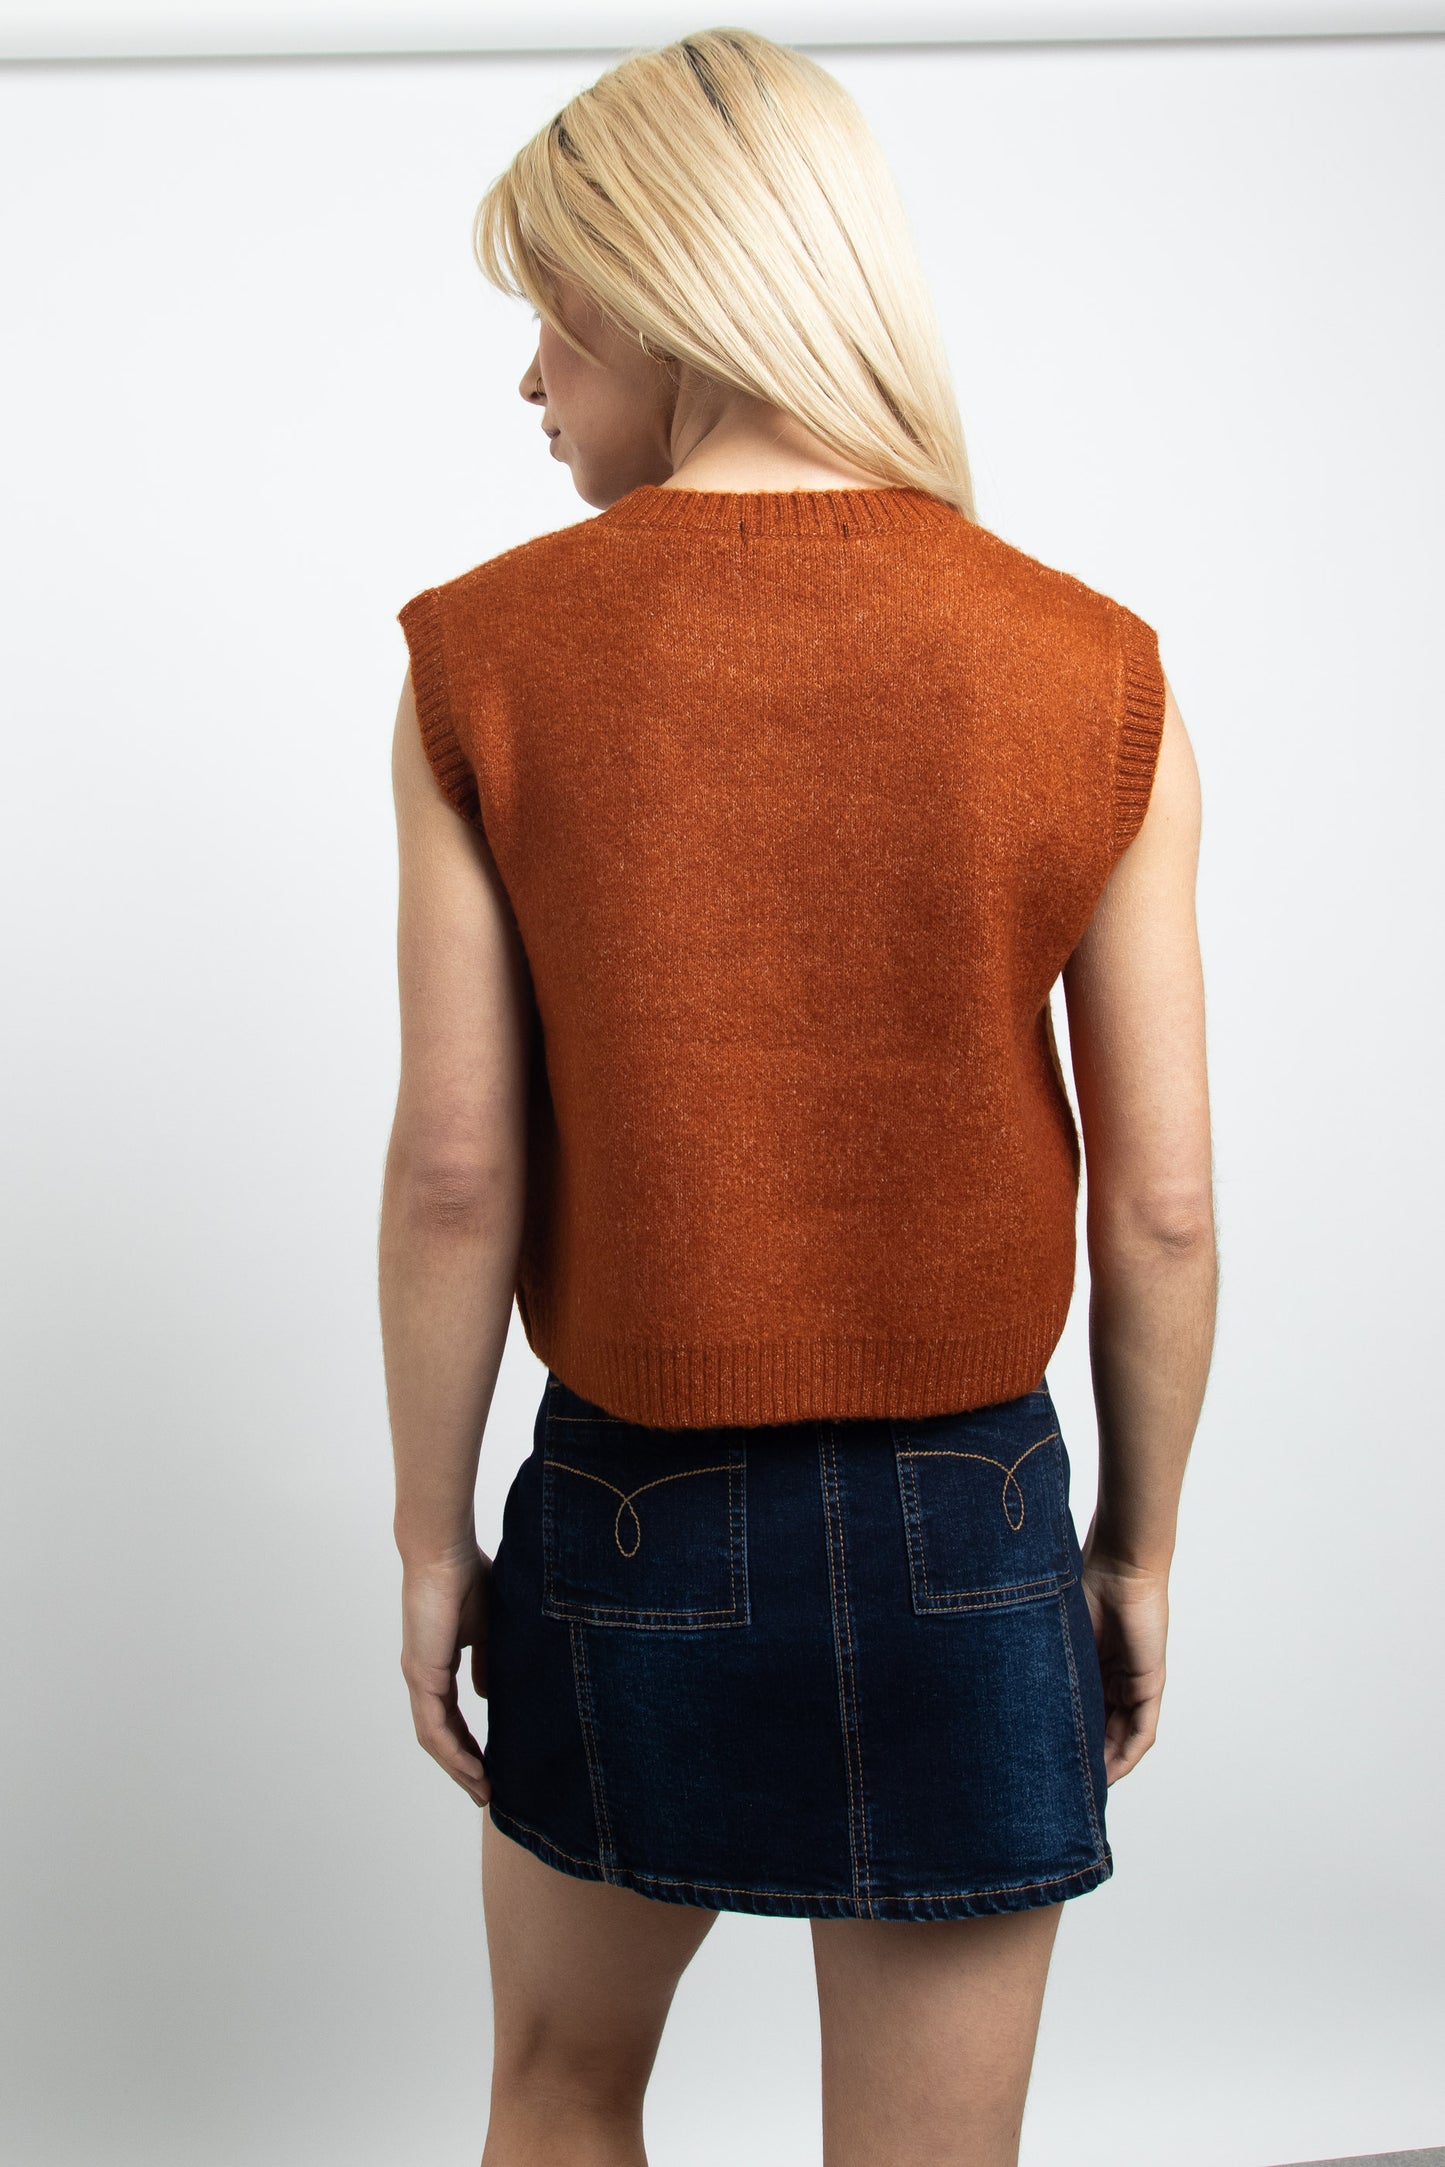 Daisy Street - Fluffy Yin Yang Knit Vest in Burnt Orange